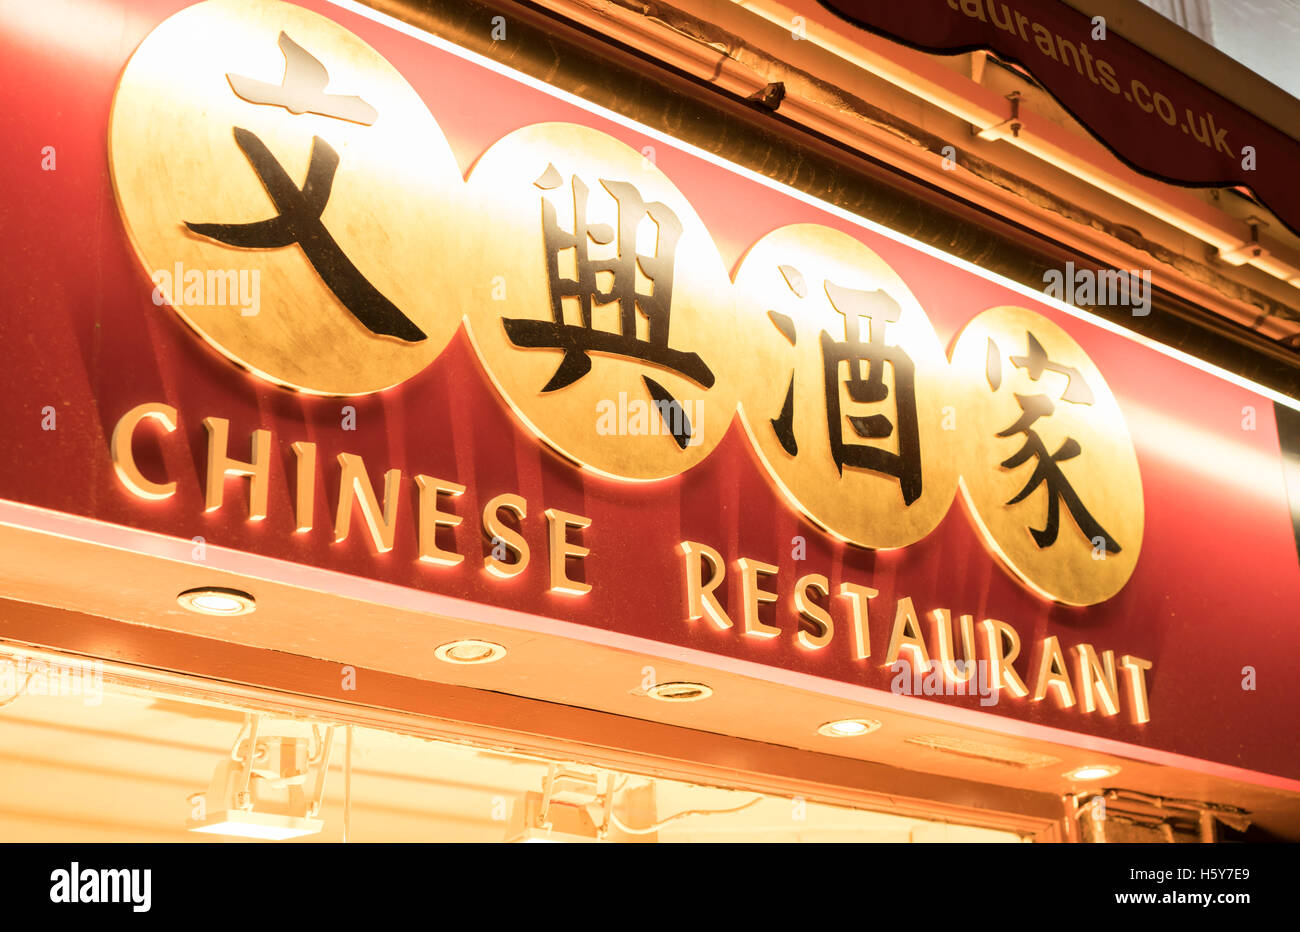 Chinese Restaurant in London Chinatown LONDON, ENGLAND - FEBRUARY 22, 2016 Stock Photo